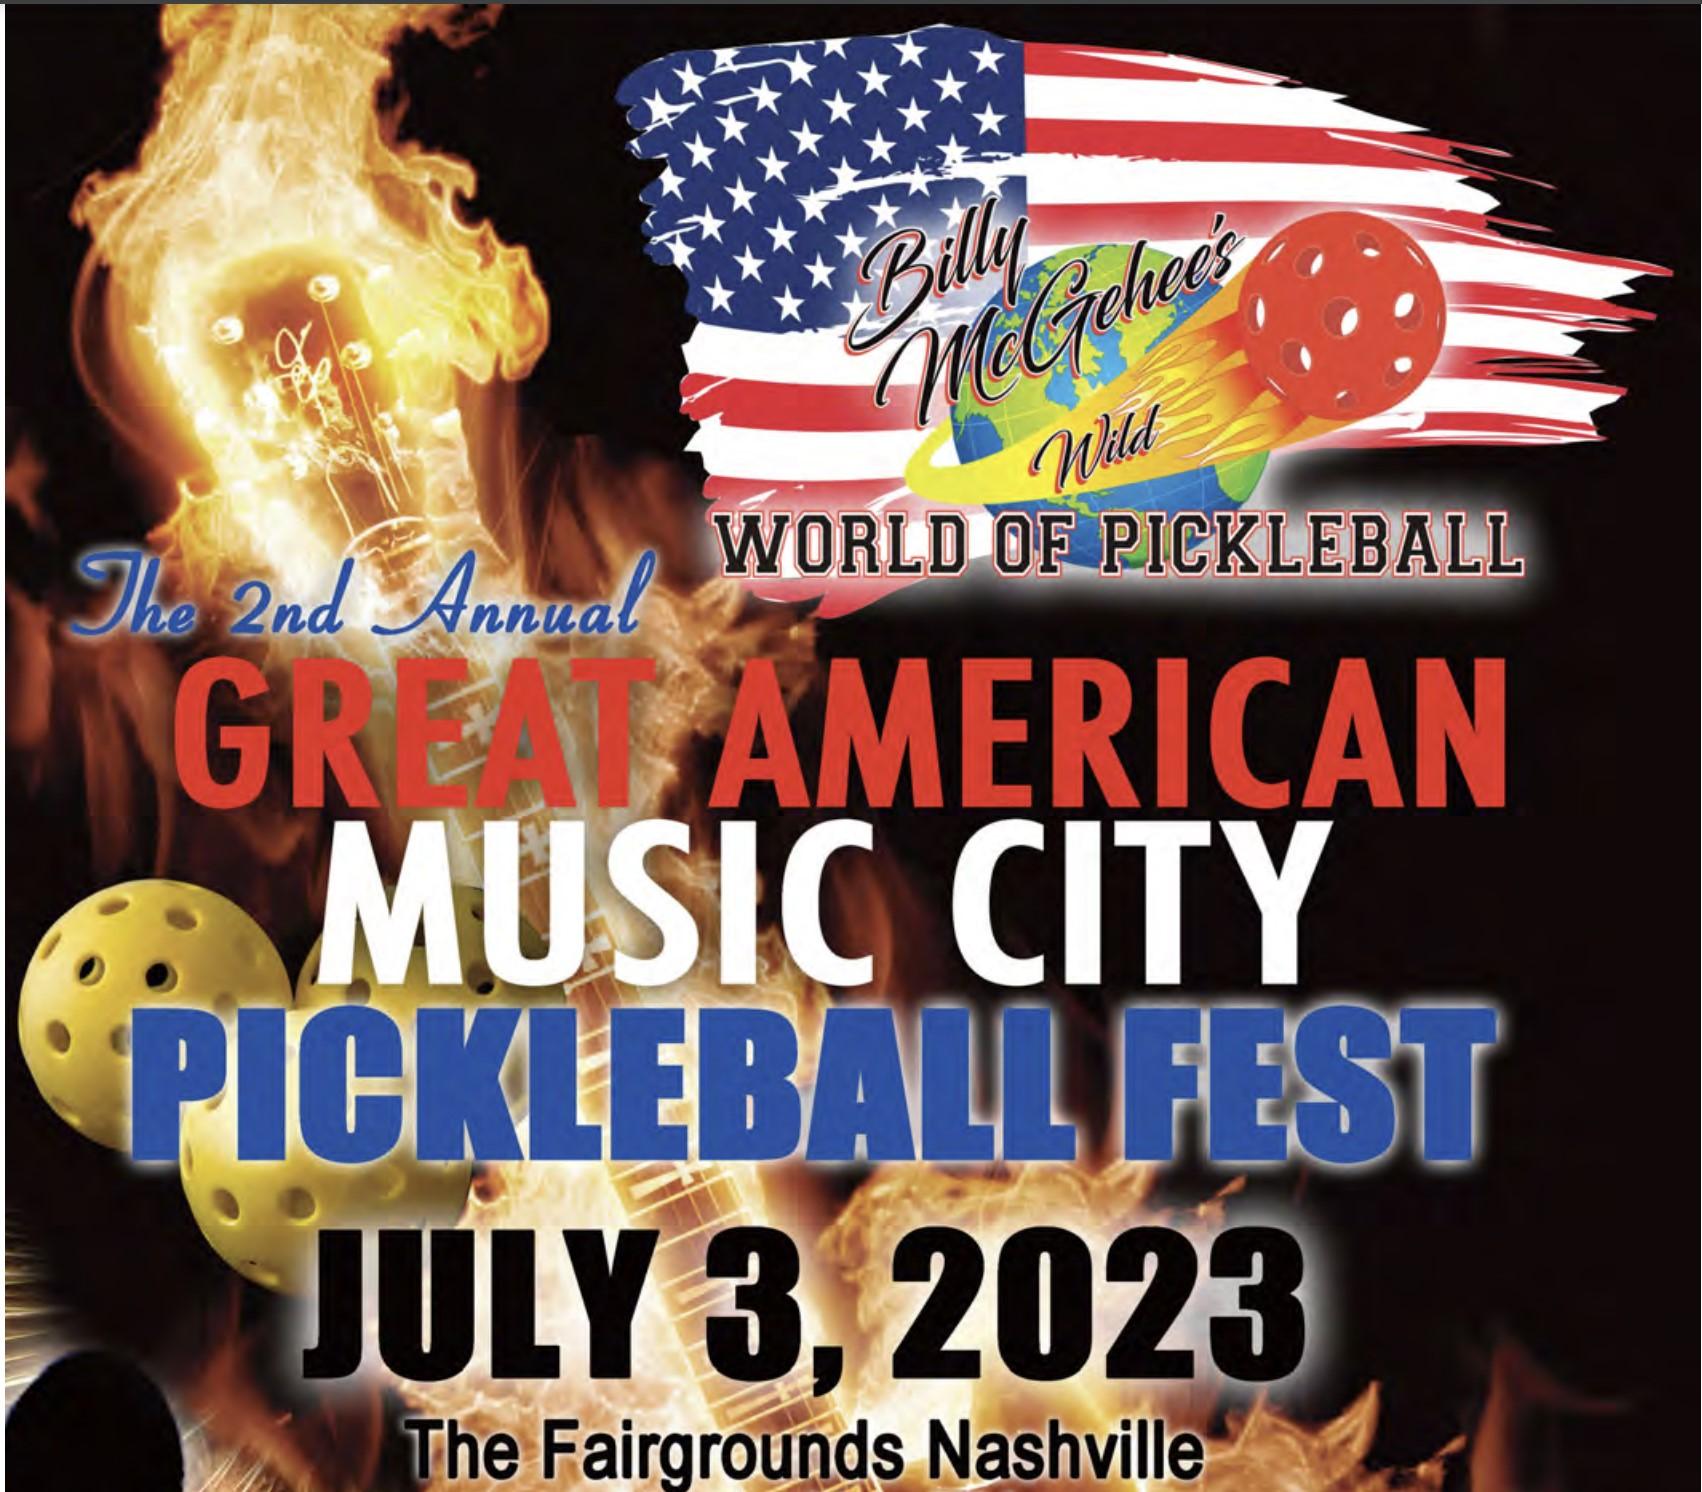 2nd Annual Great American Pickleball Fest - July 3, 2023 - Nashville Fairgrounds